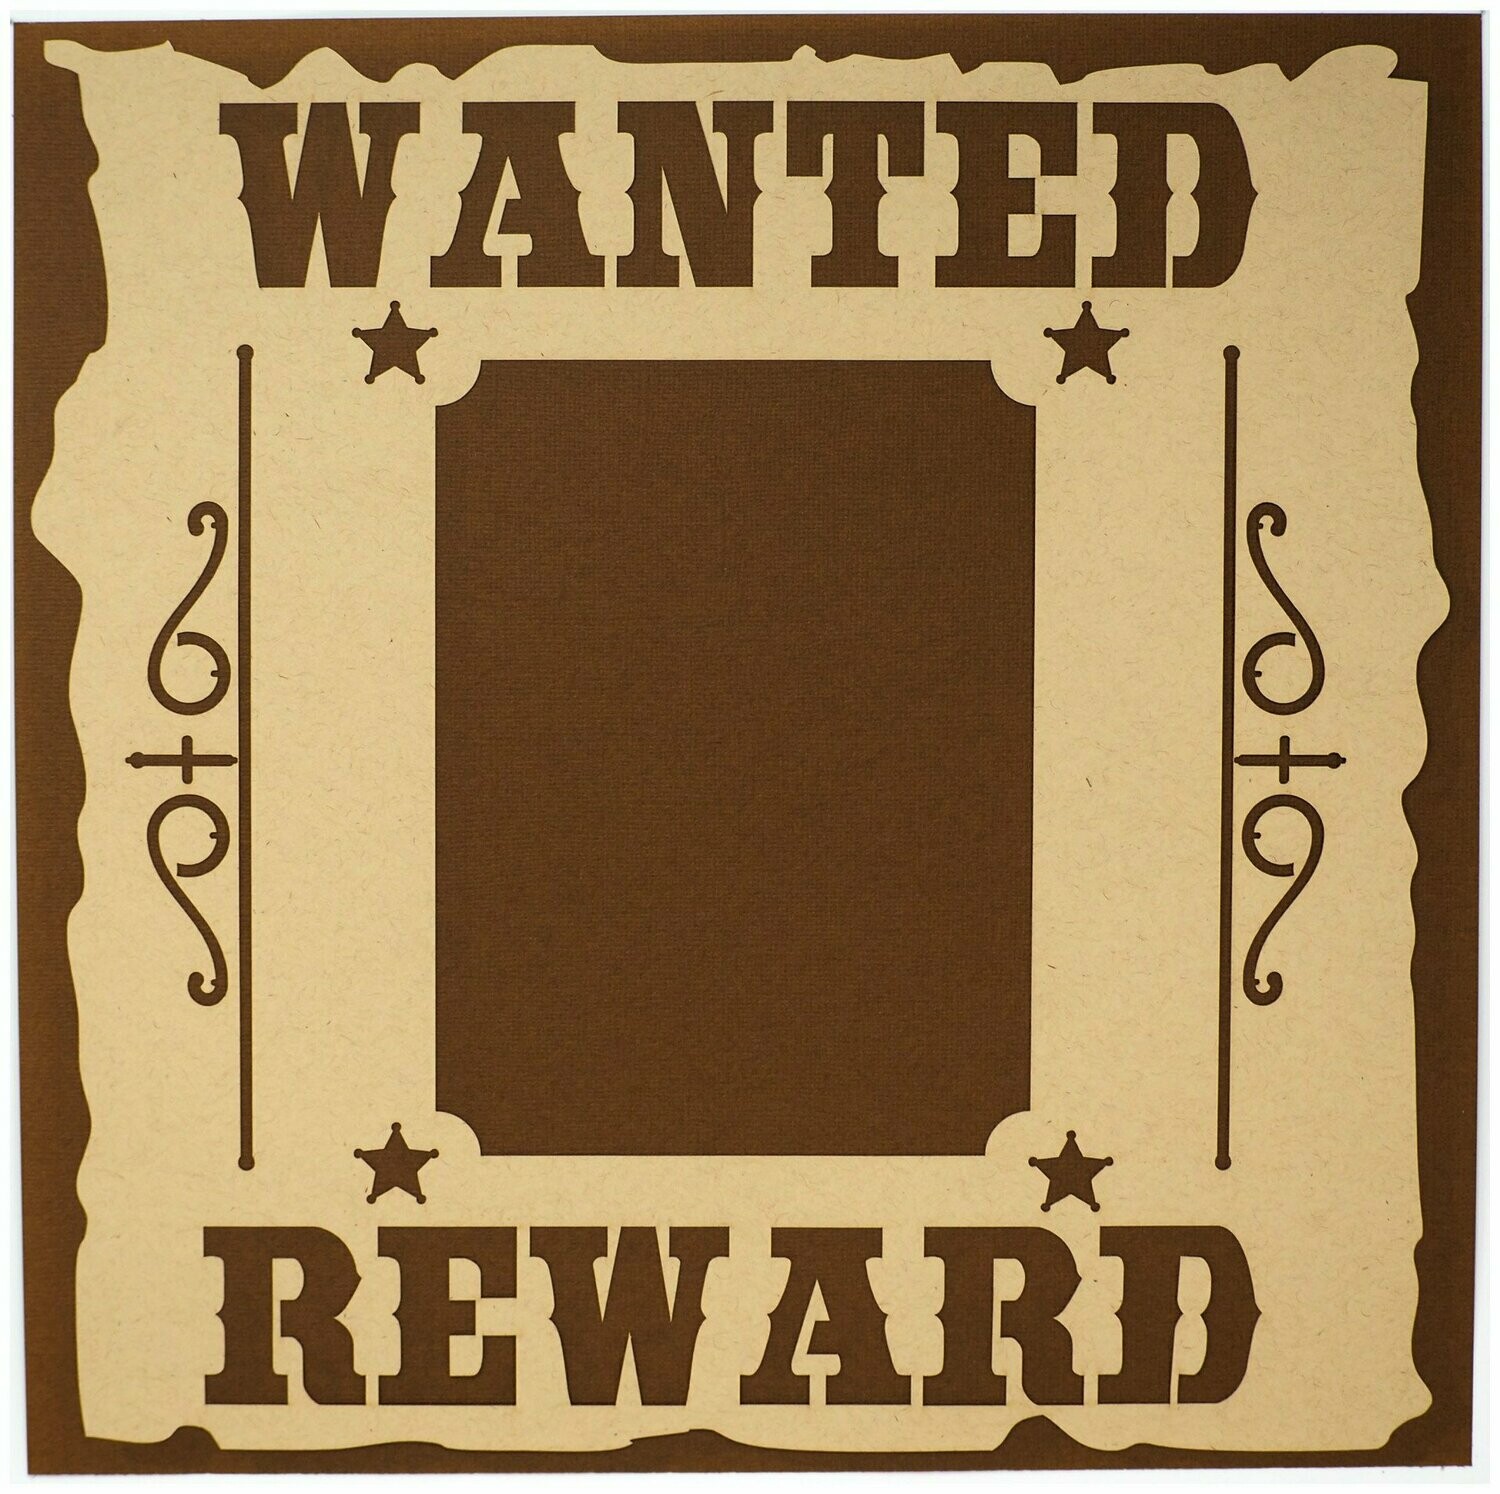 Wanted Reward